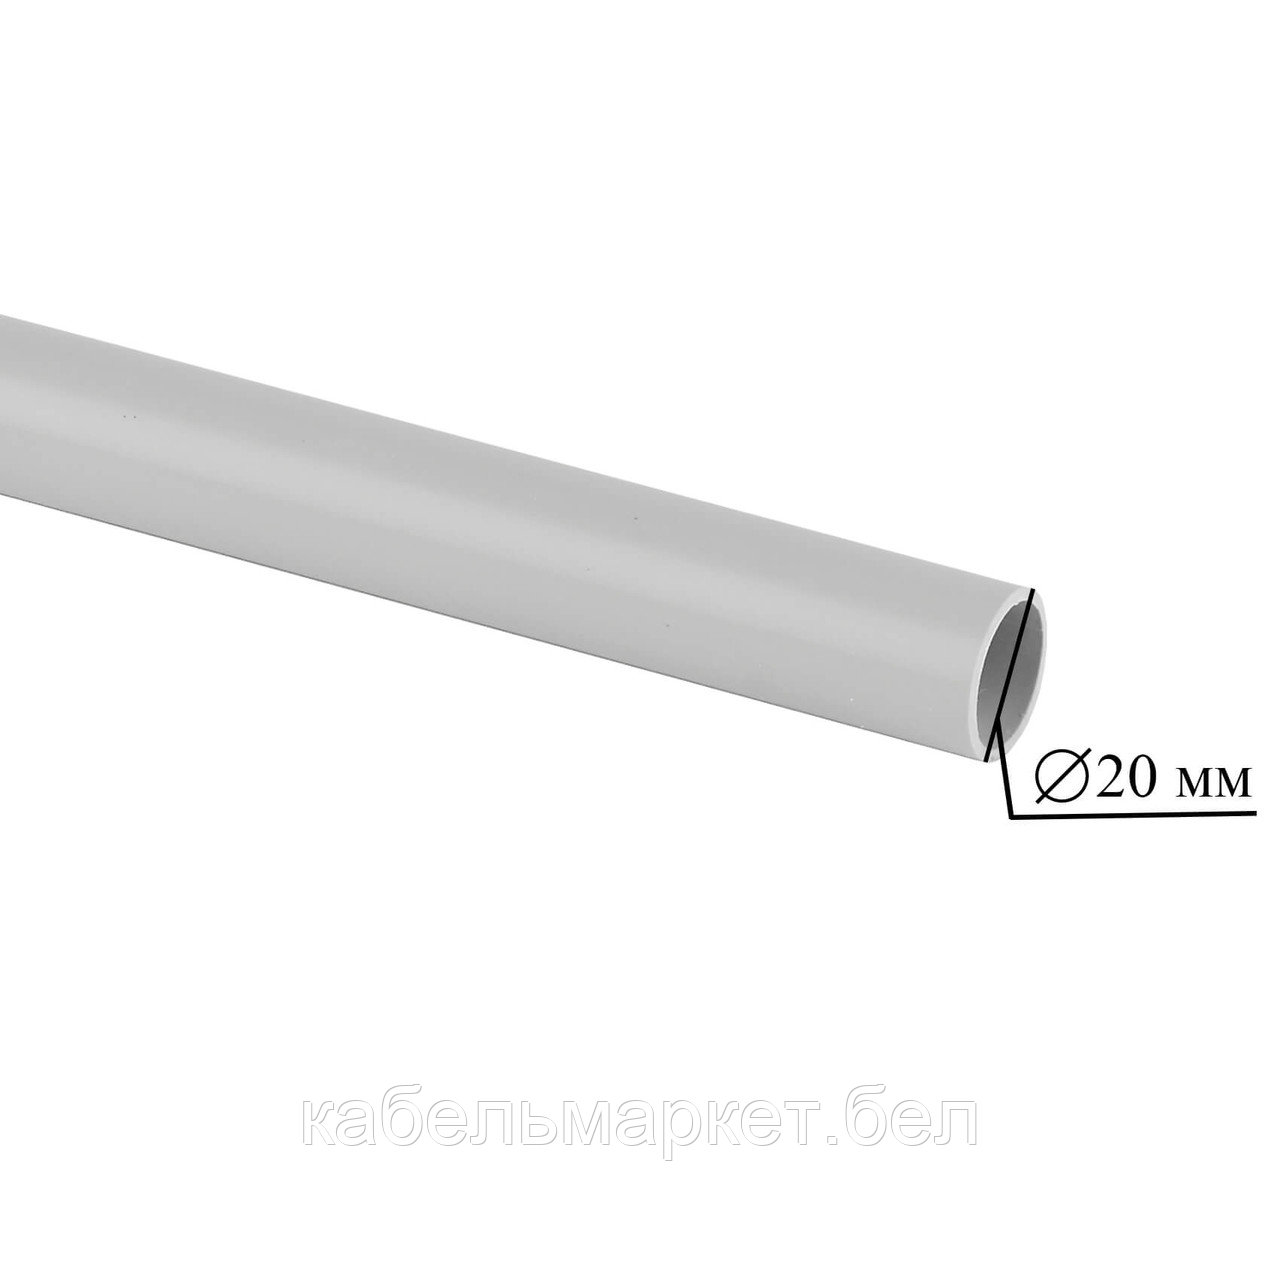 52000 - Труба ПВХ гладкая 20 мм (по 3 метра), фото 1